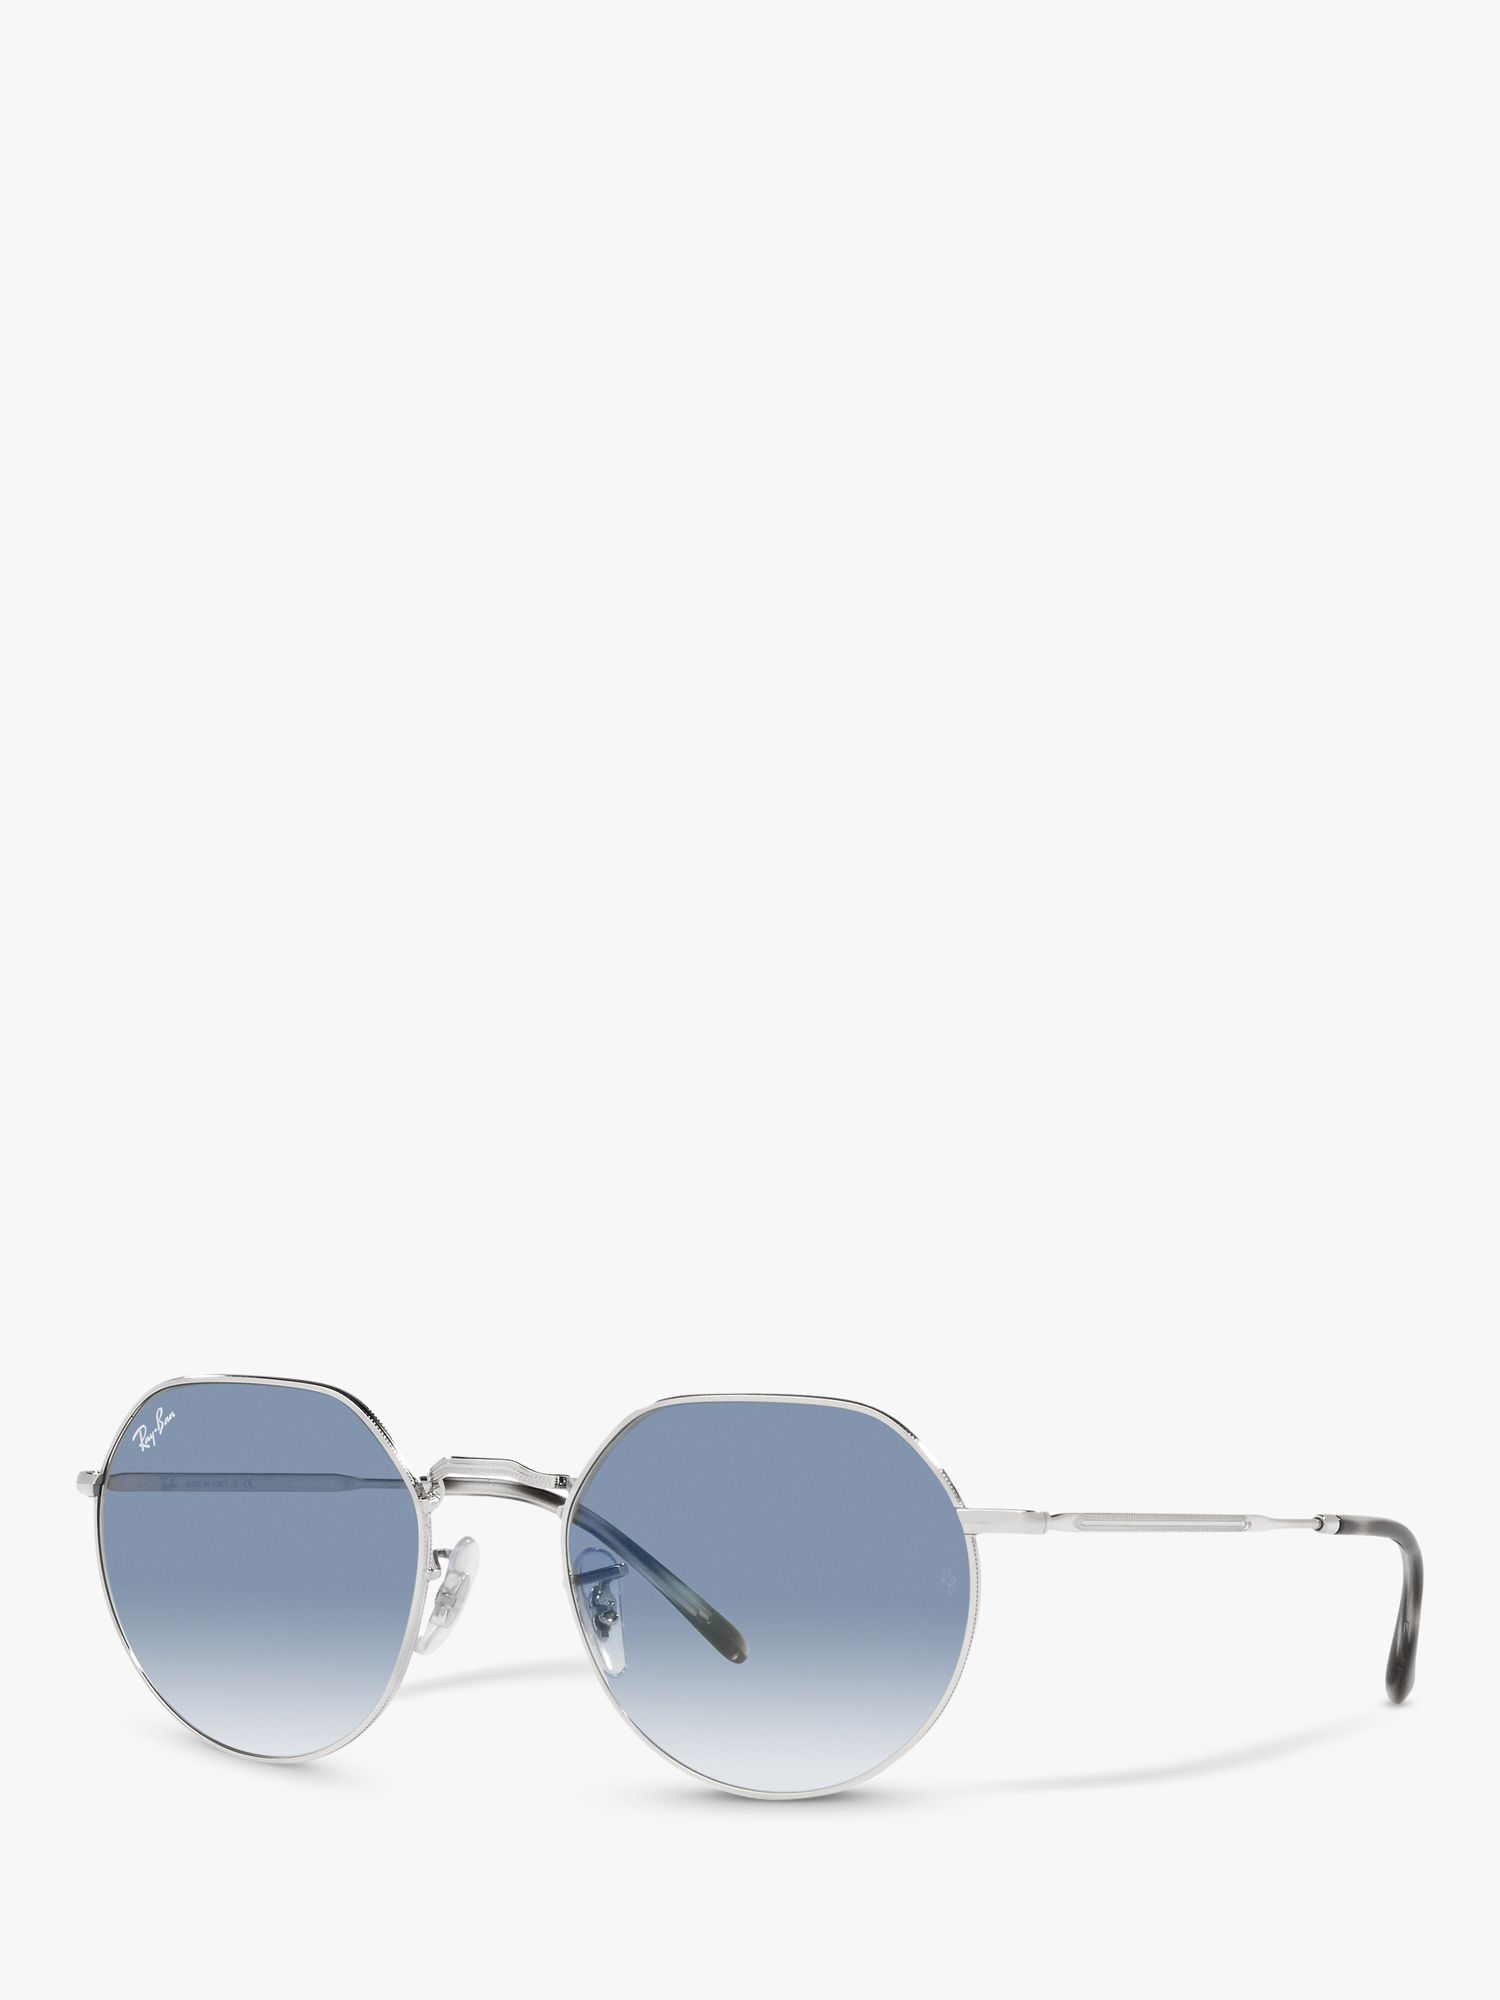 Ray-Ban RB3565 Jack Unisex Metal Hexagonal Sunglasses, Silver/Light Blue  Gradient at John Lewis & Partners